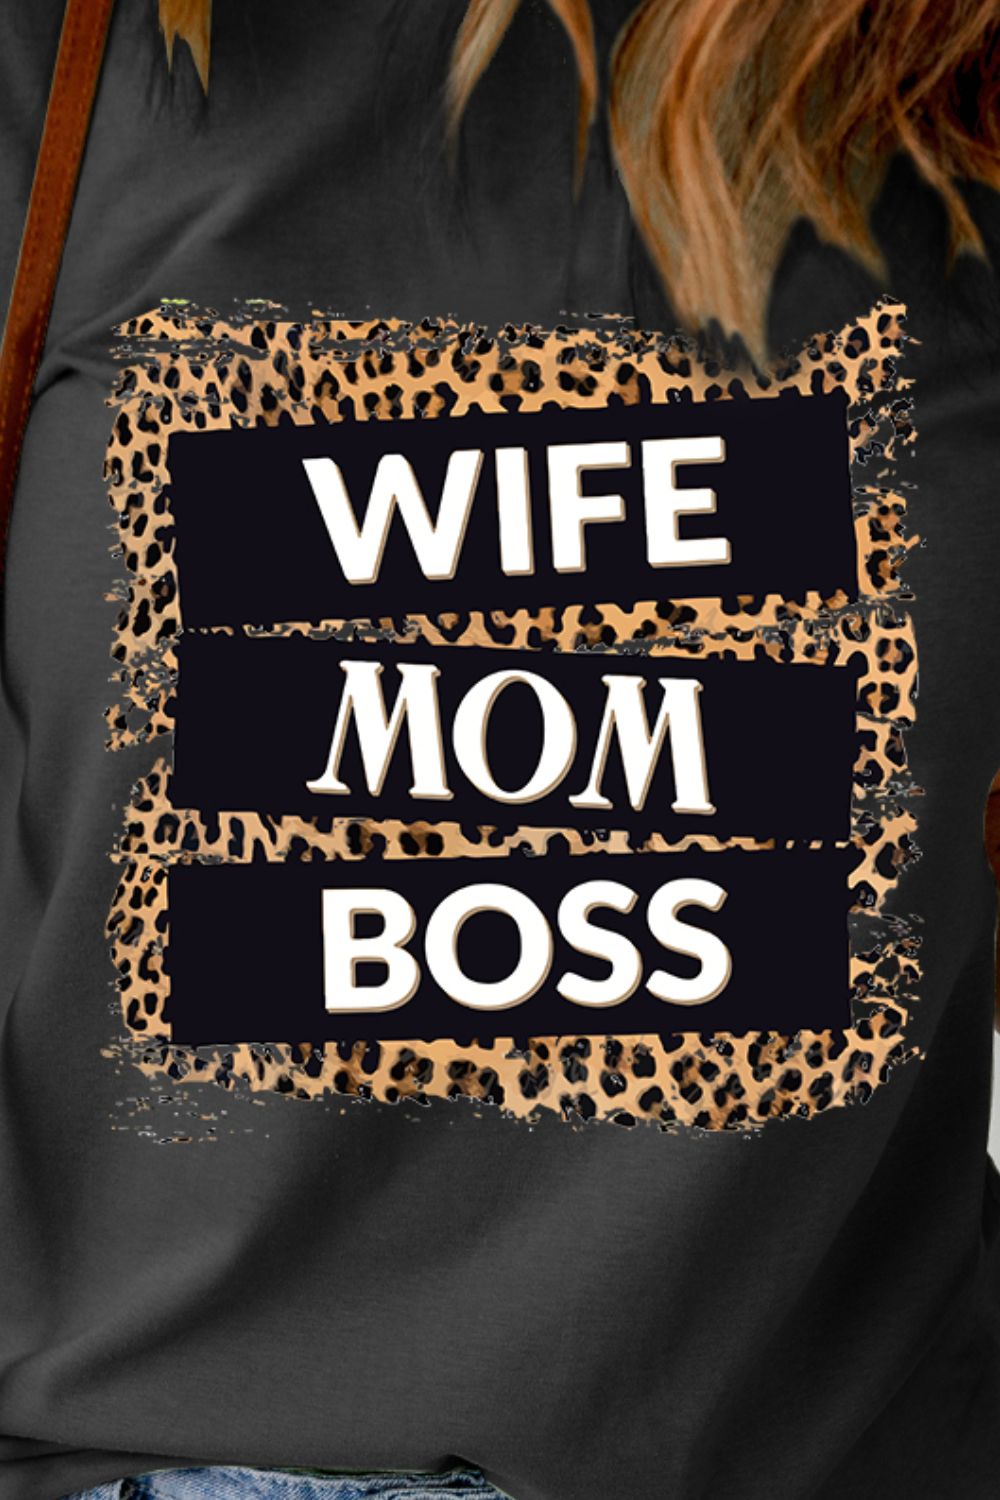 WIFE MOM BOSS Leopard Graphic Tee - FunkyPeacockStore (Store description)